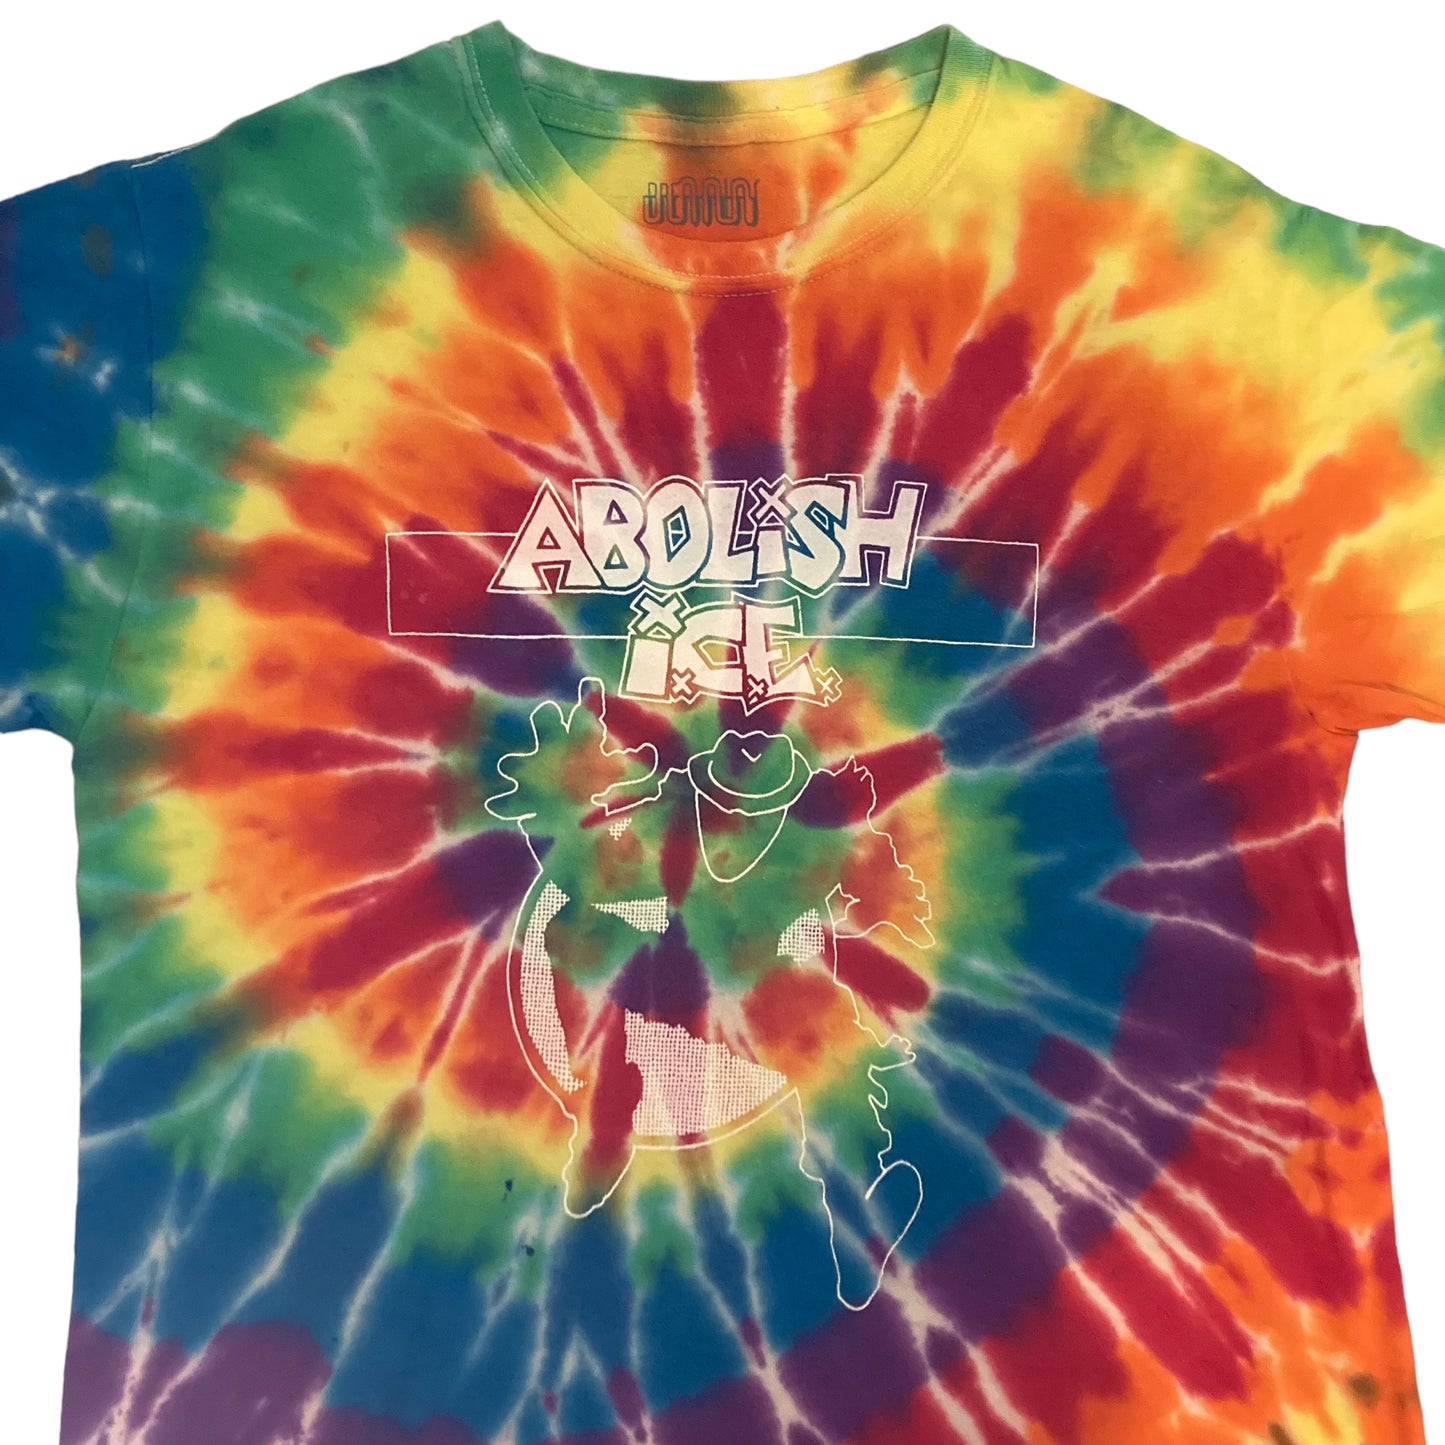 Abolish I.C.E. Shirt - One of a Kind - Tie Dye (Small)